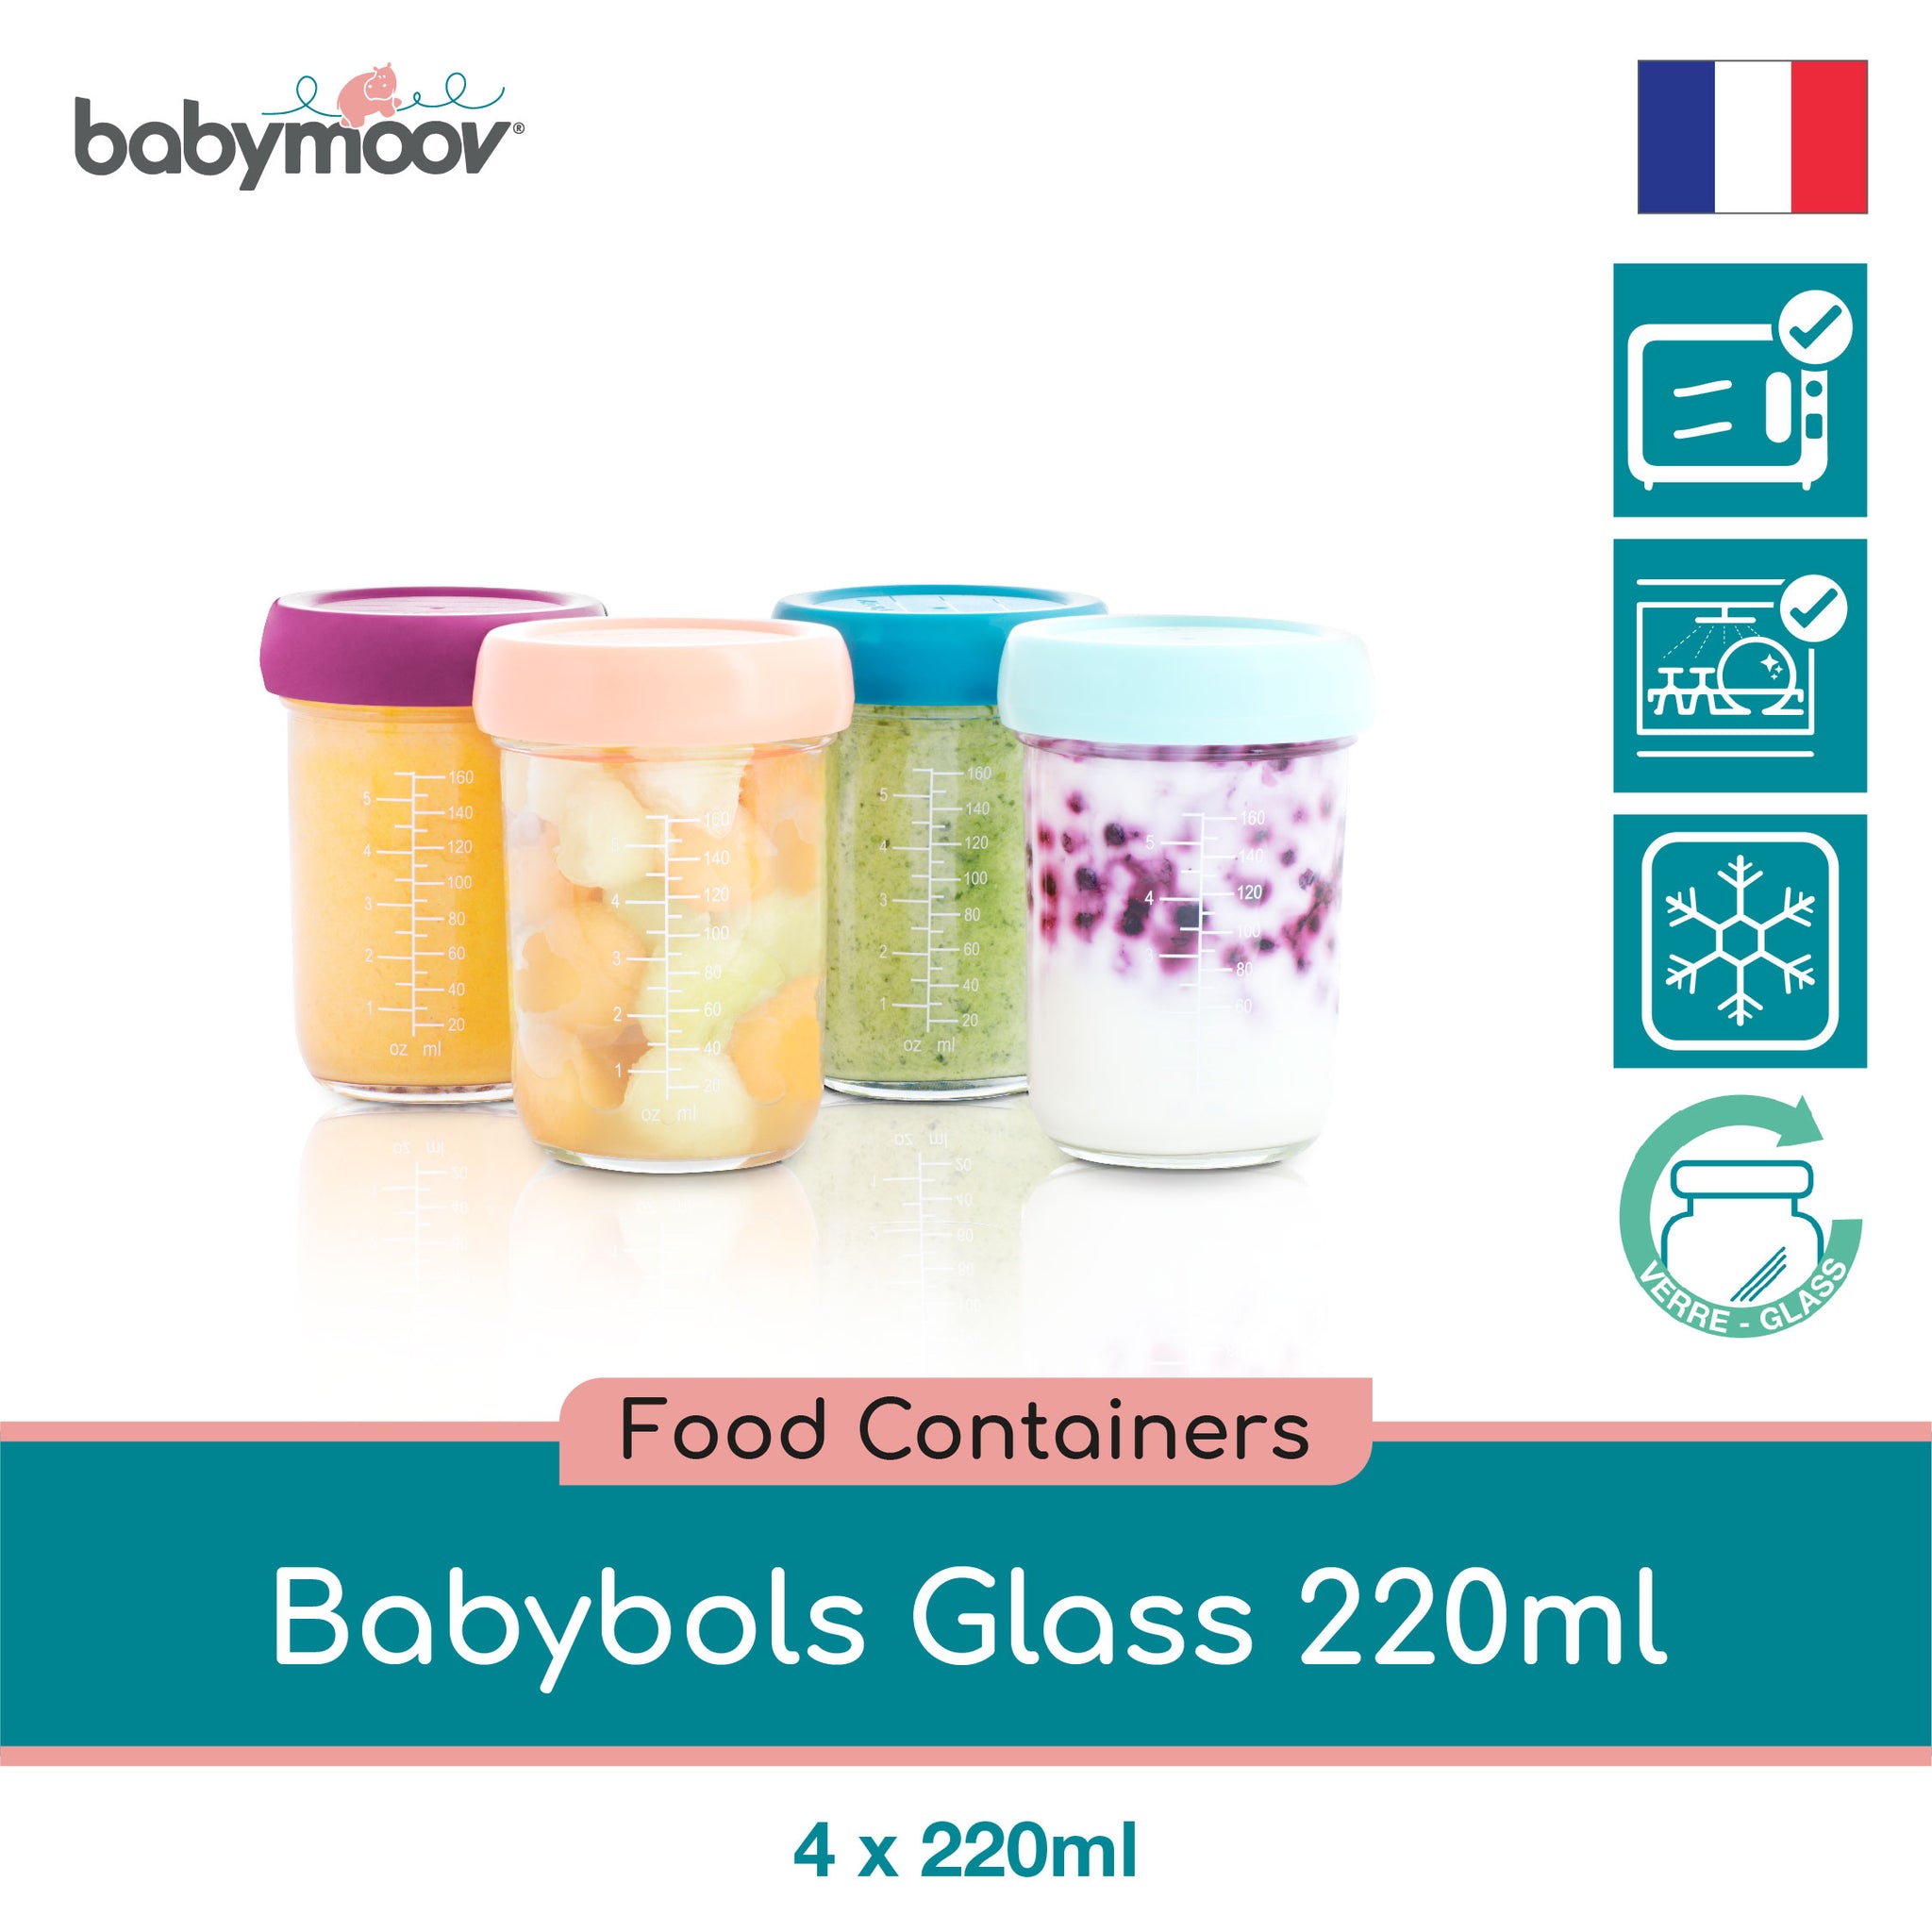 Babymoov Glass Babybols Food Storage 4 Piece Multiset